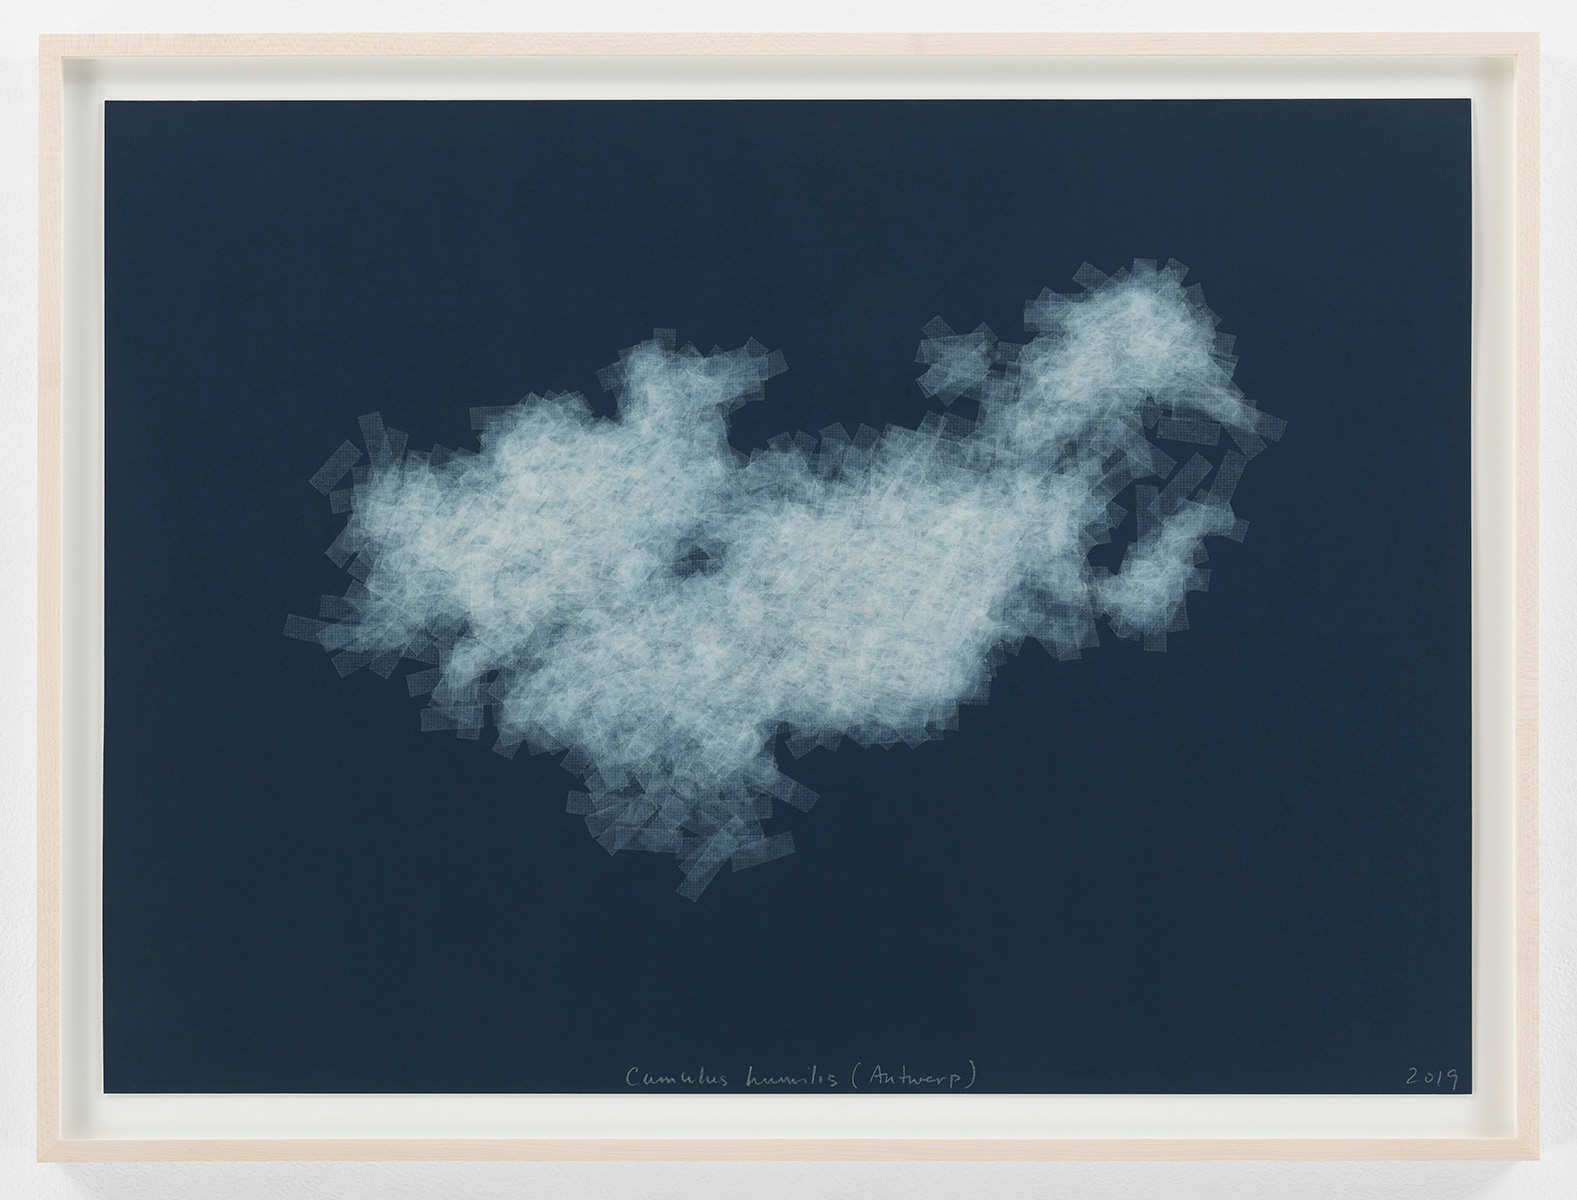 image of spencer finch's Cloud (Cumulus Humilis, Antwerp), 2019